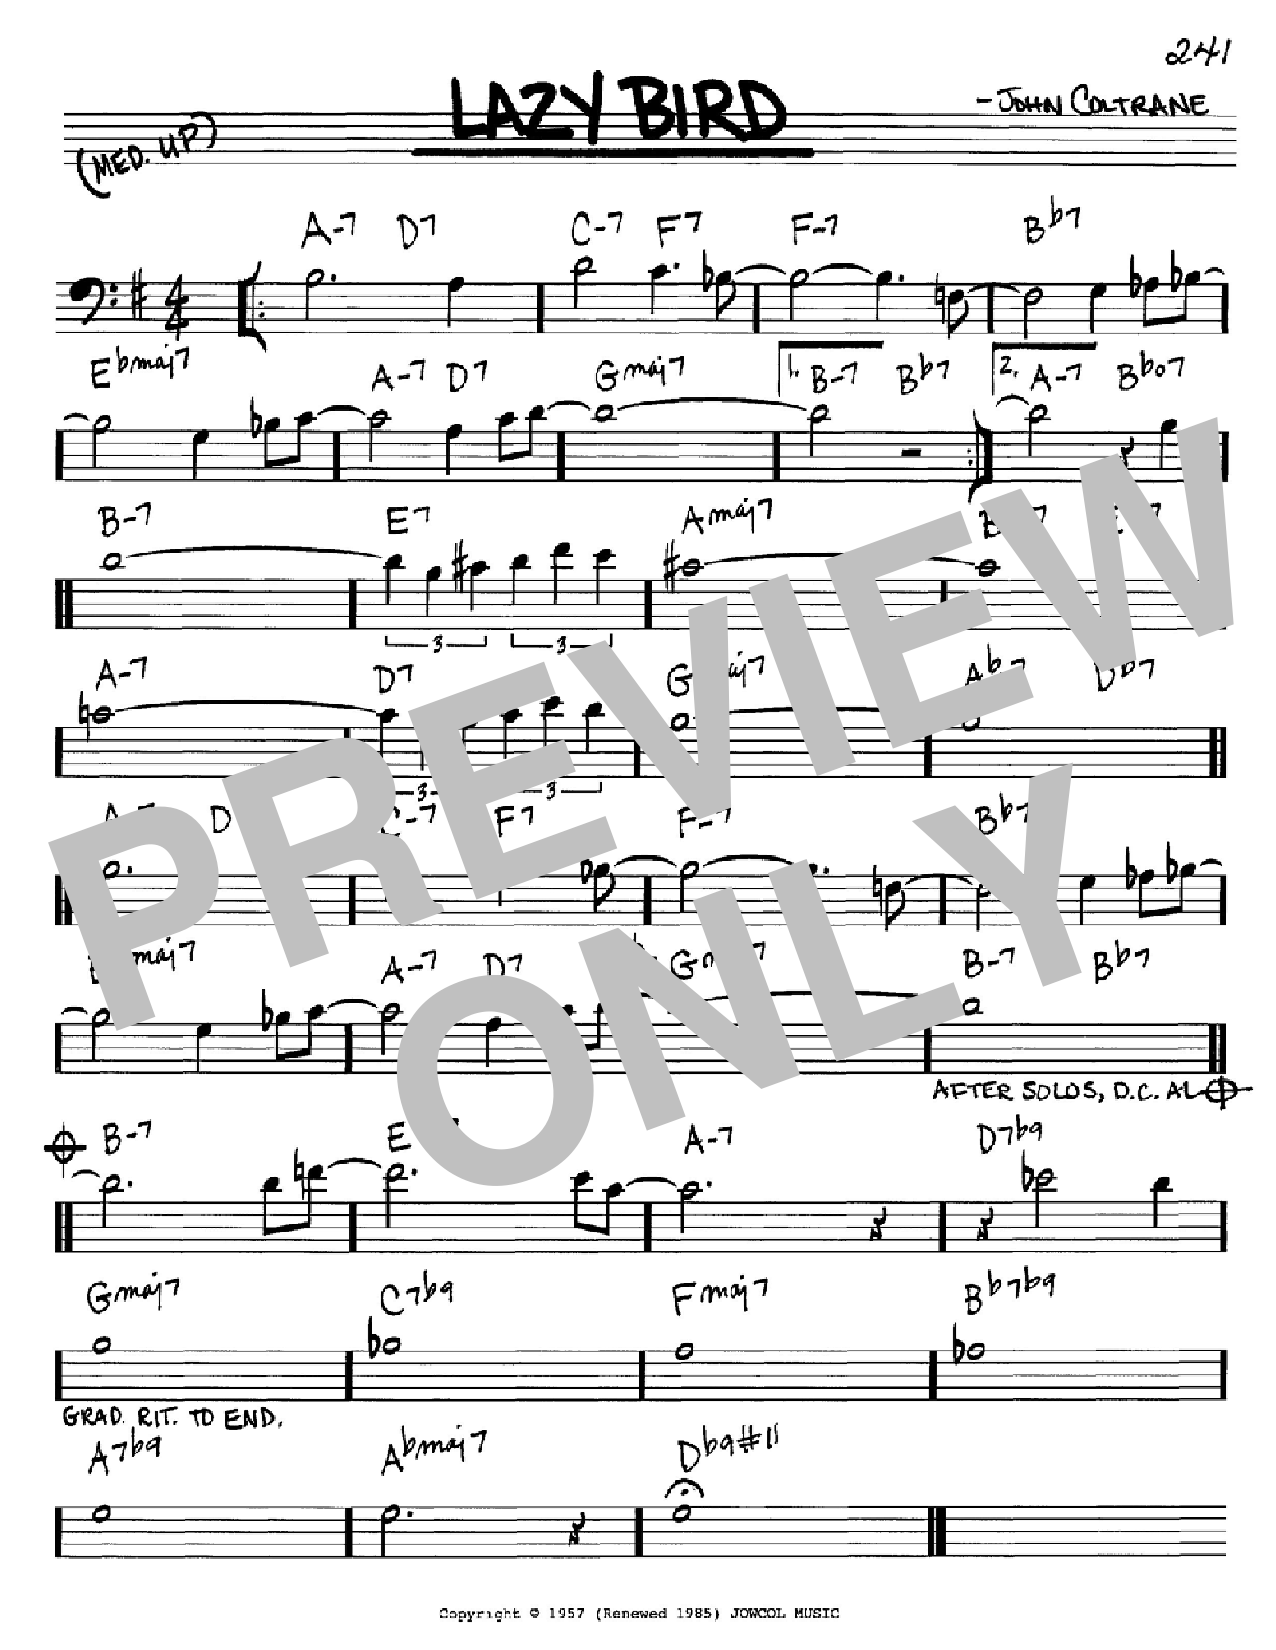 Download John Coltrane Lazy Bird Sheet Music